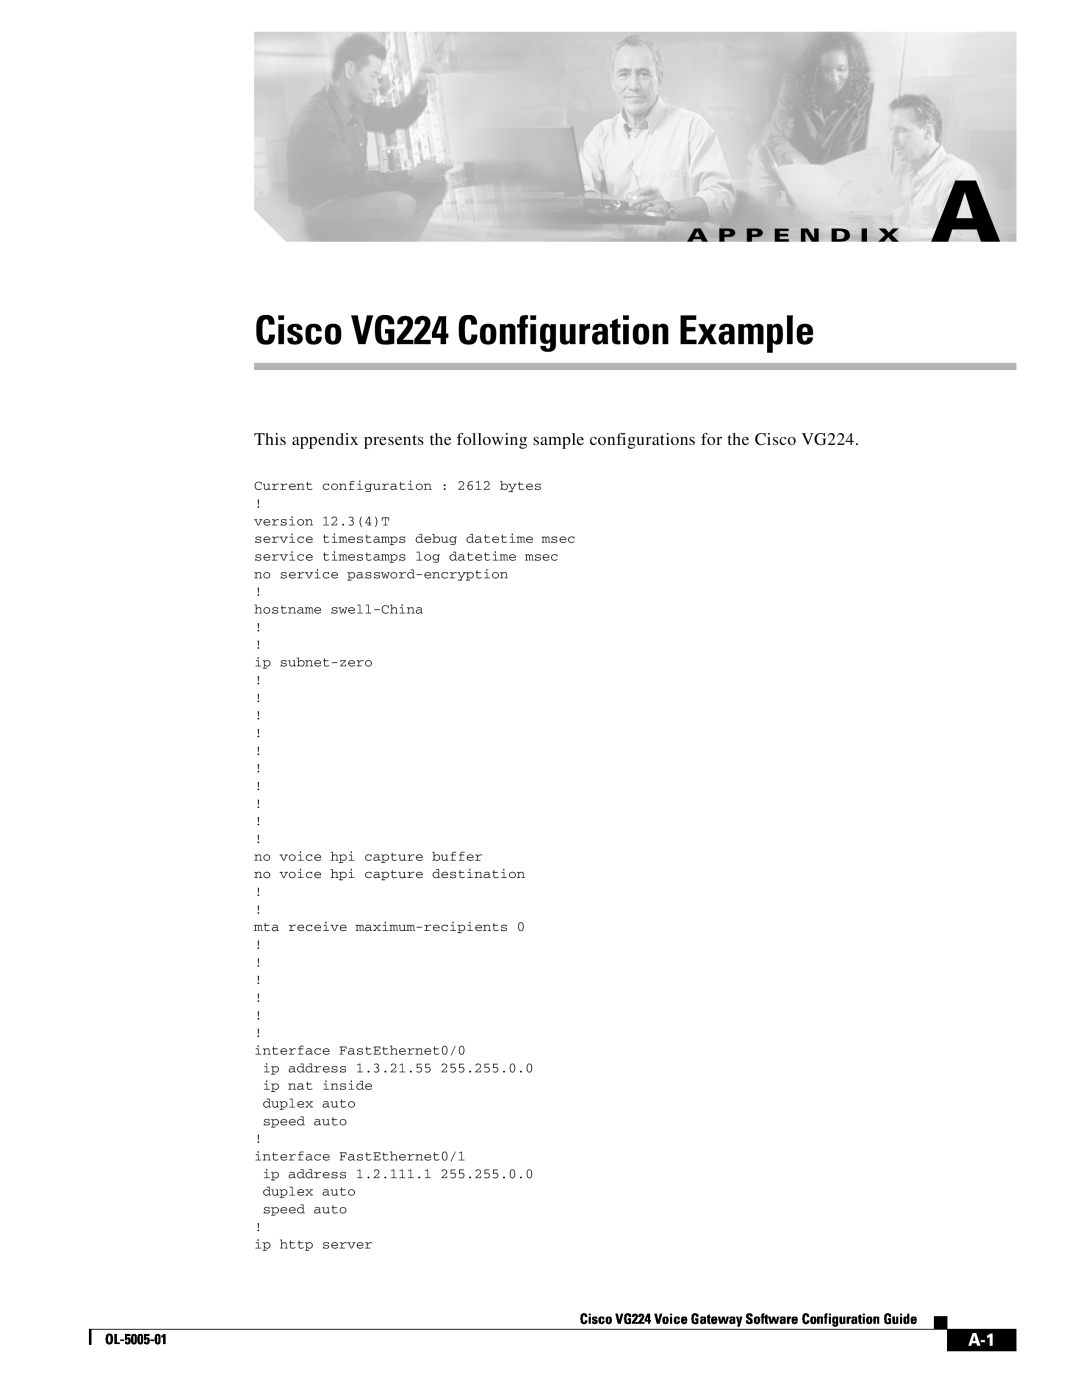 Cisco Systems manual Cisco VG224 Configuration Example, A P P E N D I X A, OL-5005-01 